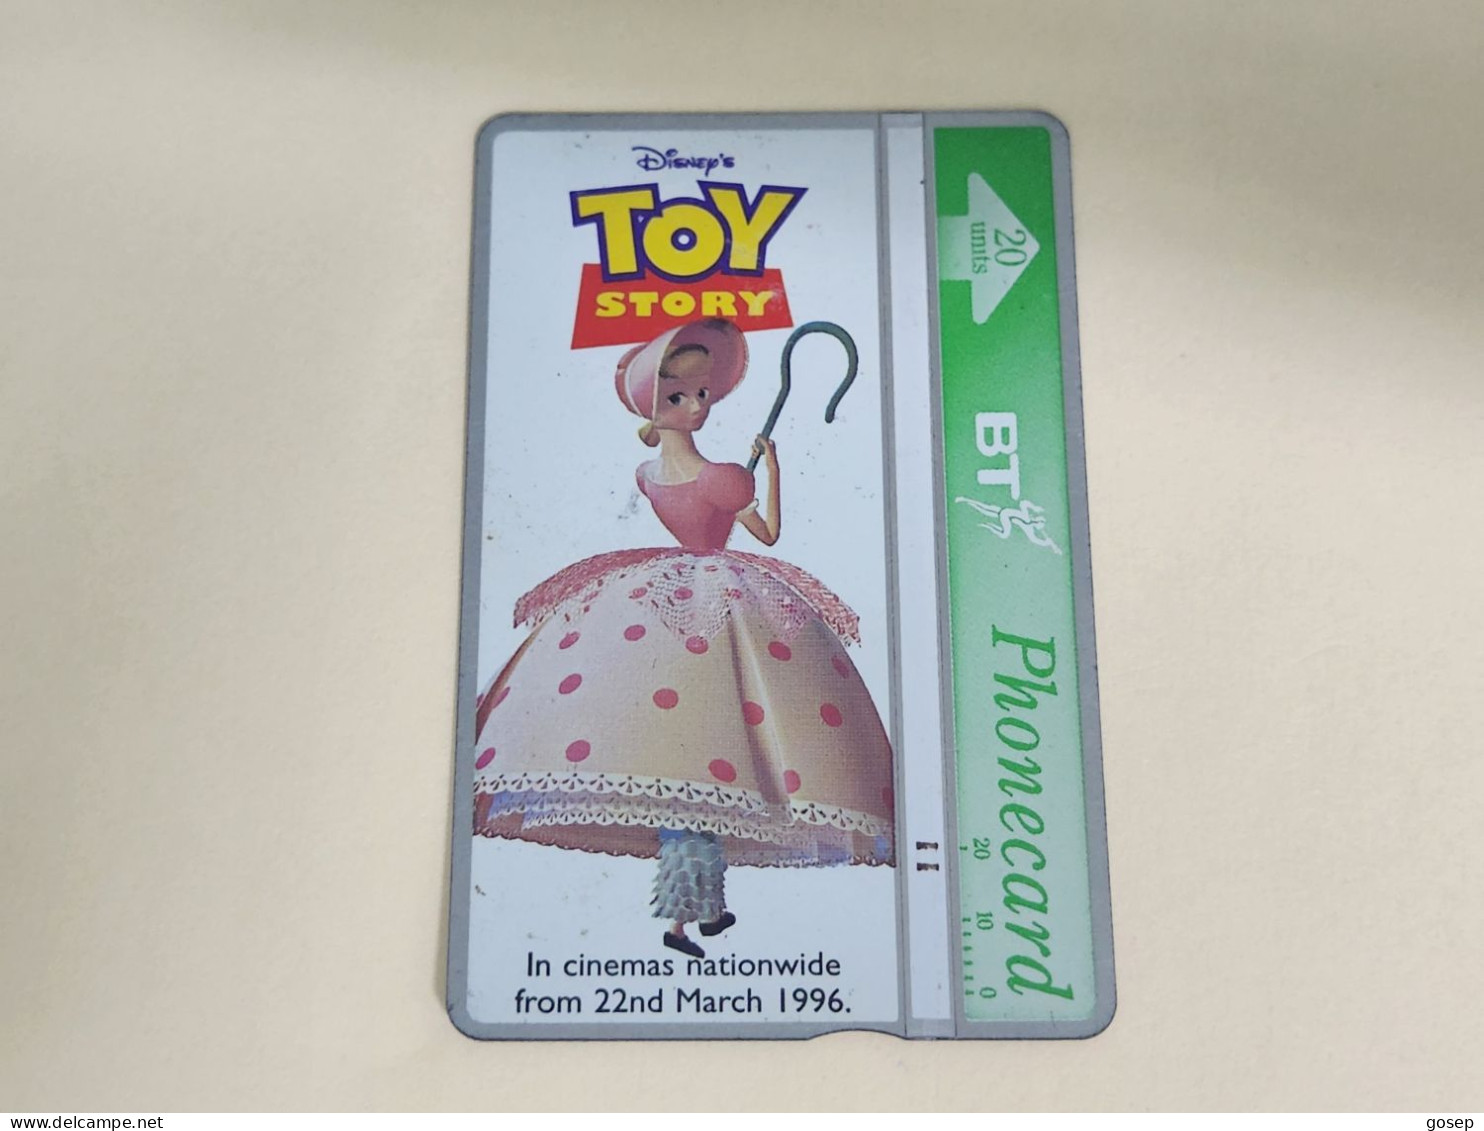 United Kingdom-(BTA152)Disney's Toy-5 BO-BEEP-(261)(20units)(642K01950)price Cataloge 3.00£ Used+1card Prepiad Free - BT Advertising Issues